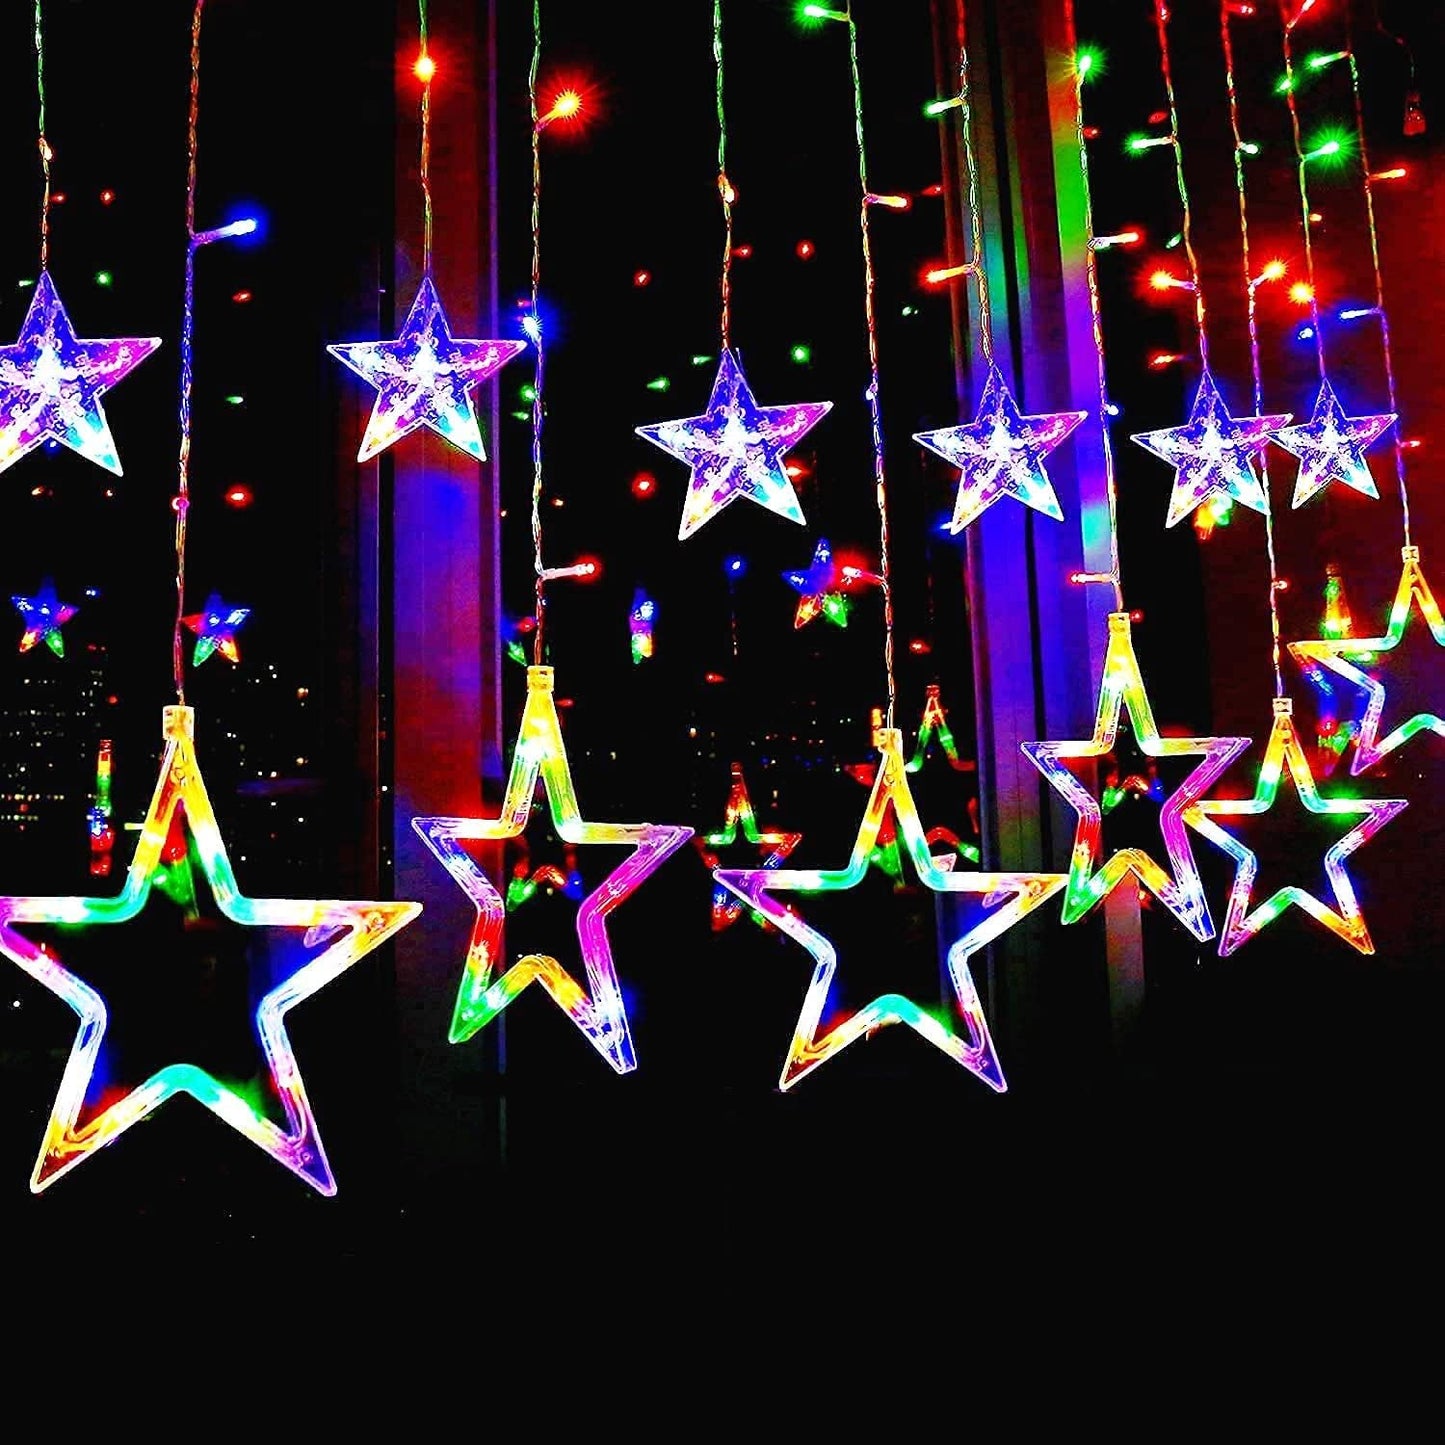 EYUVAA 12 Stars LED Curtain String Light, RGB Window Curtain Light with 8 Flashing Modes for Diwali Decoration, Living Room, Patio, Festivals (6x6 Feet, Multicolor)